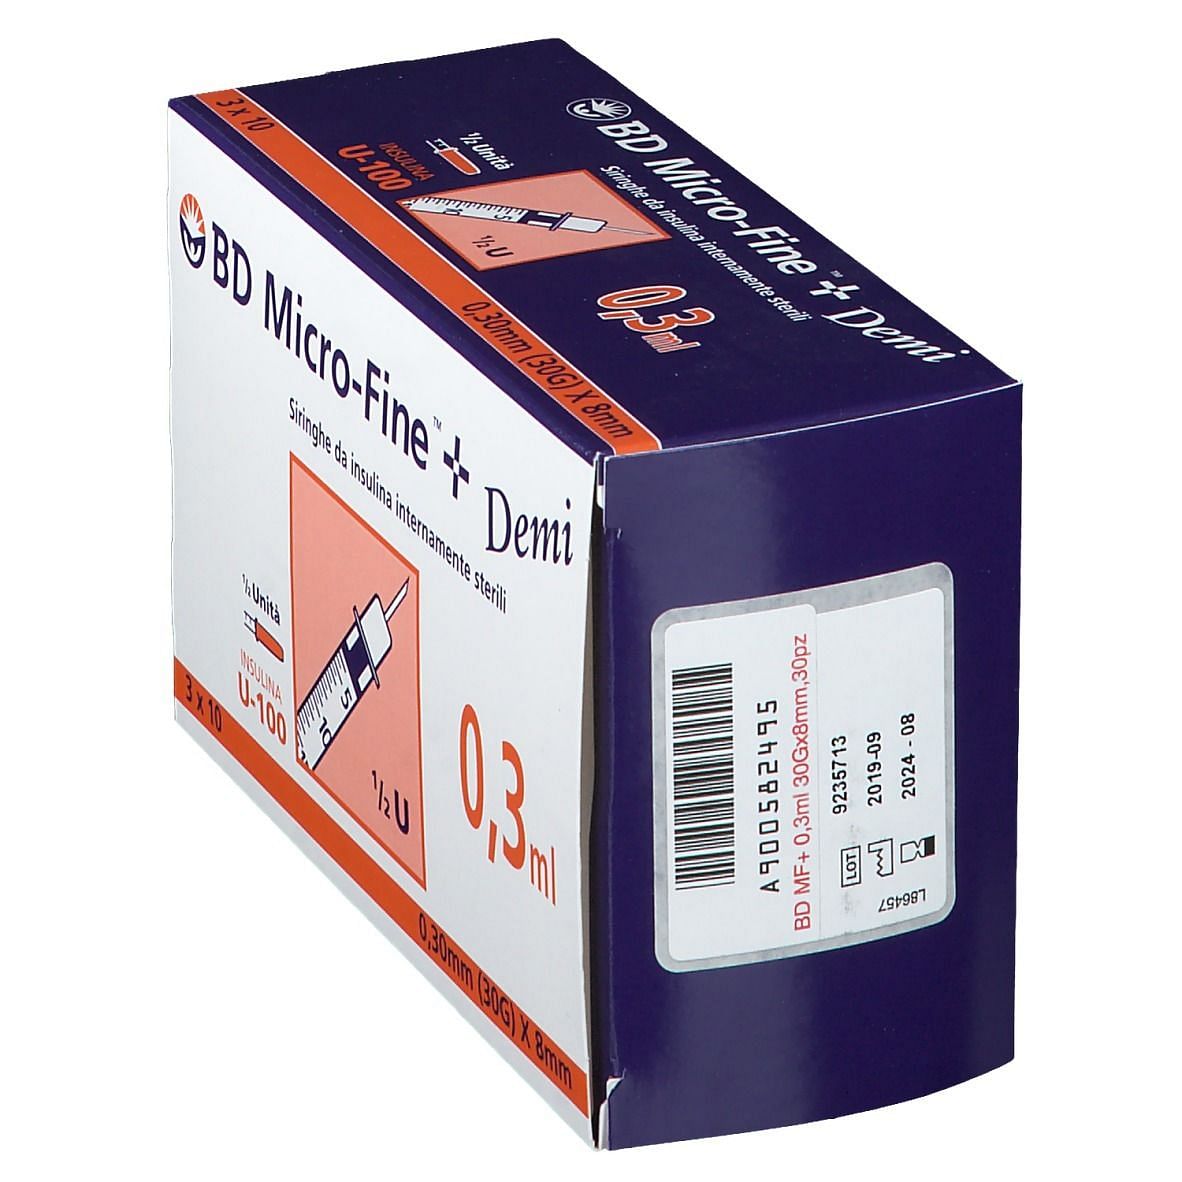 BD Micro-Fine Ago per Penna Somministrazione Insulina Gauge 30 100pz -  Farmacie Ravenna